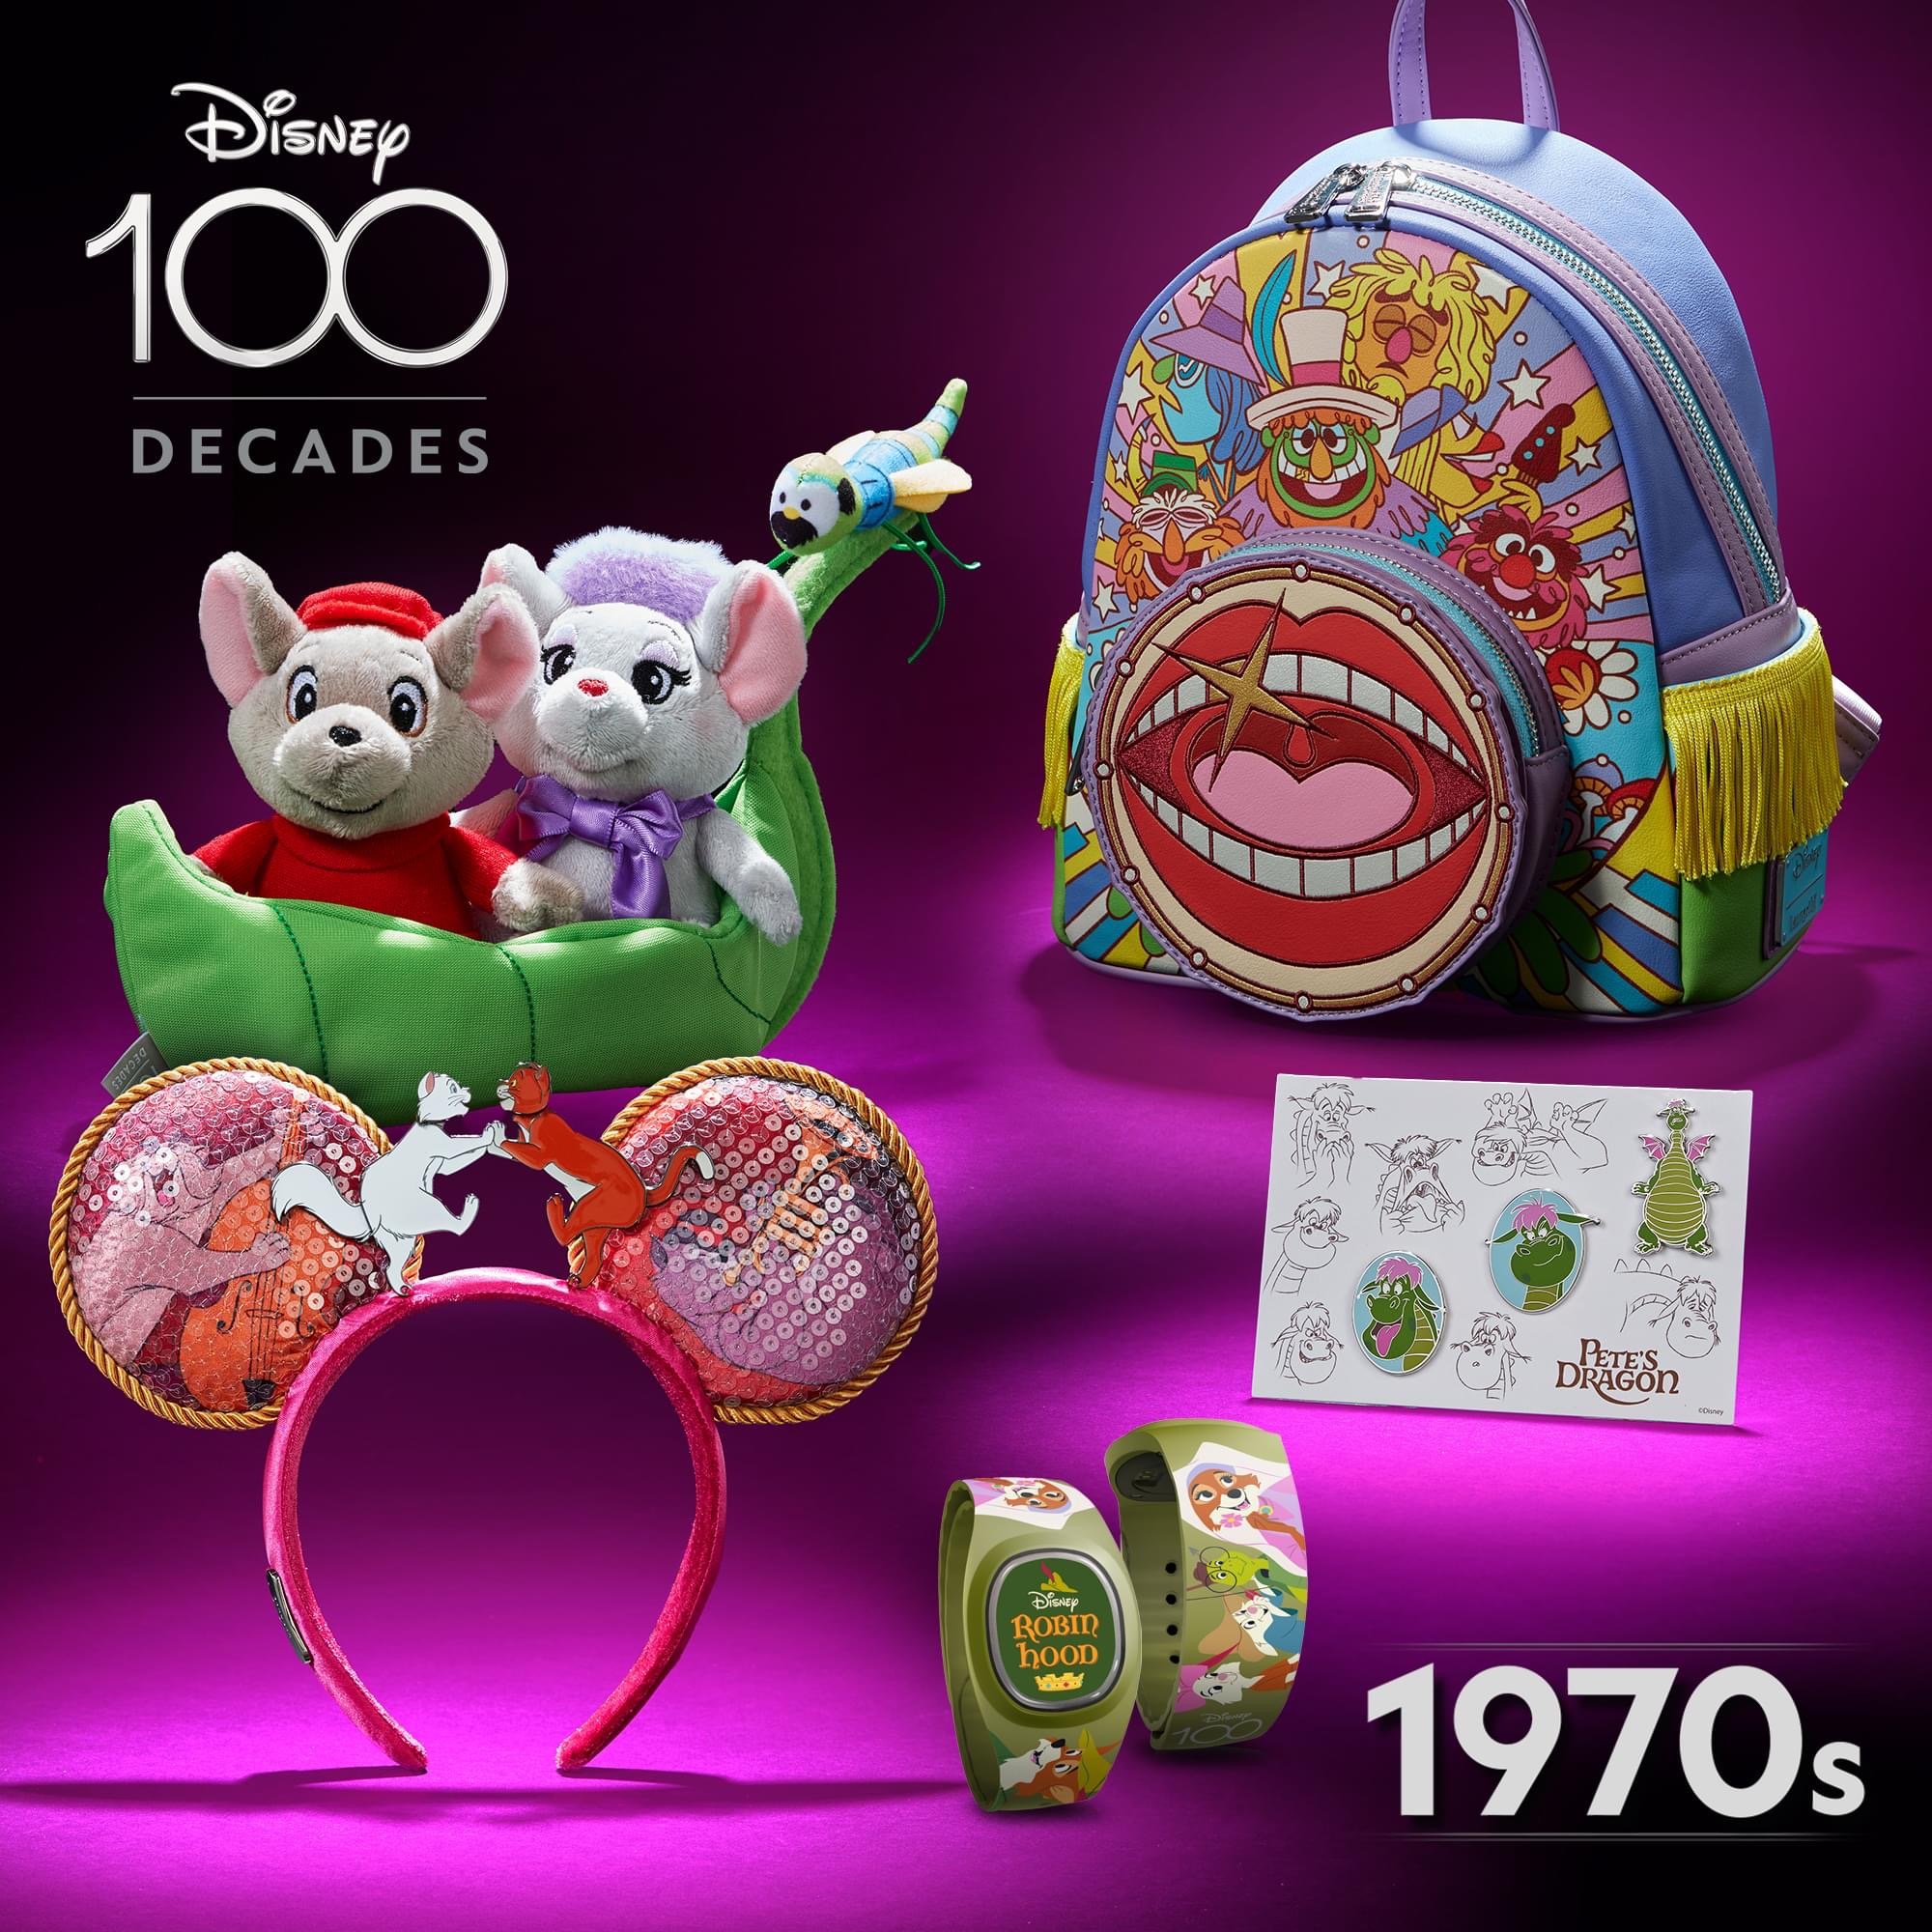 Disney100 Decades 1970s Collection on shopDisney — EXTRA MAGIC MINUTES